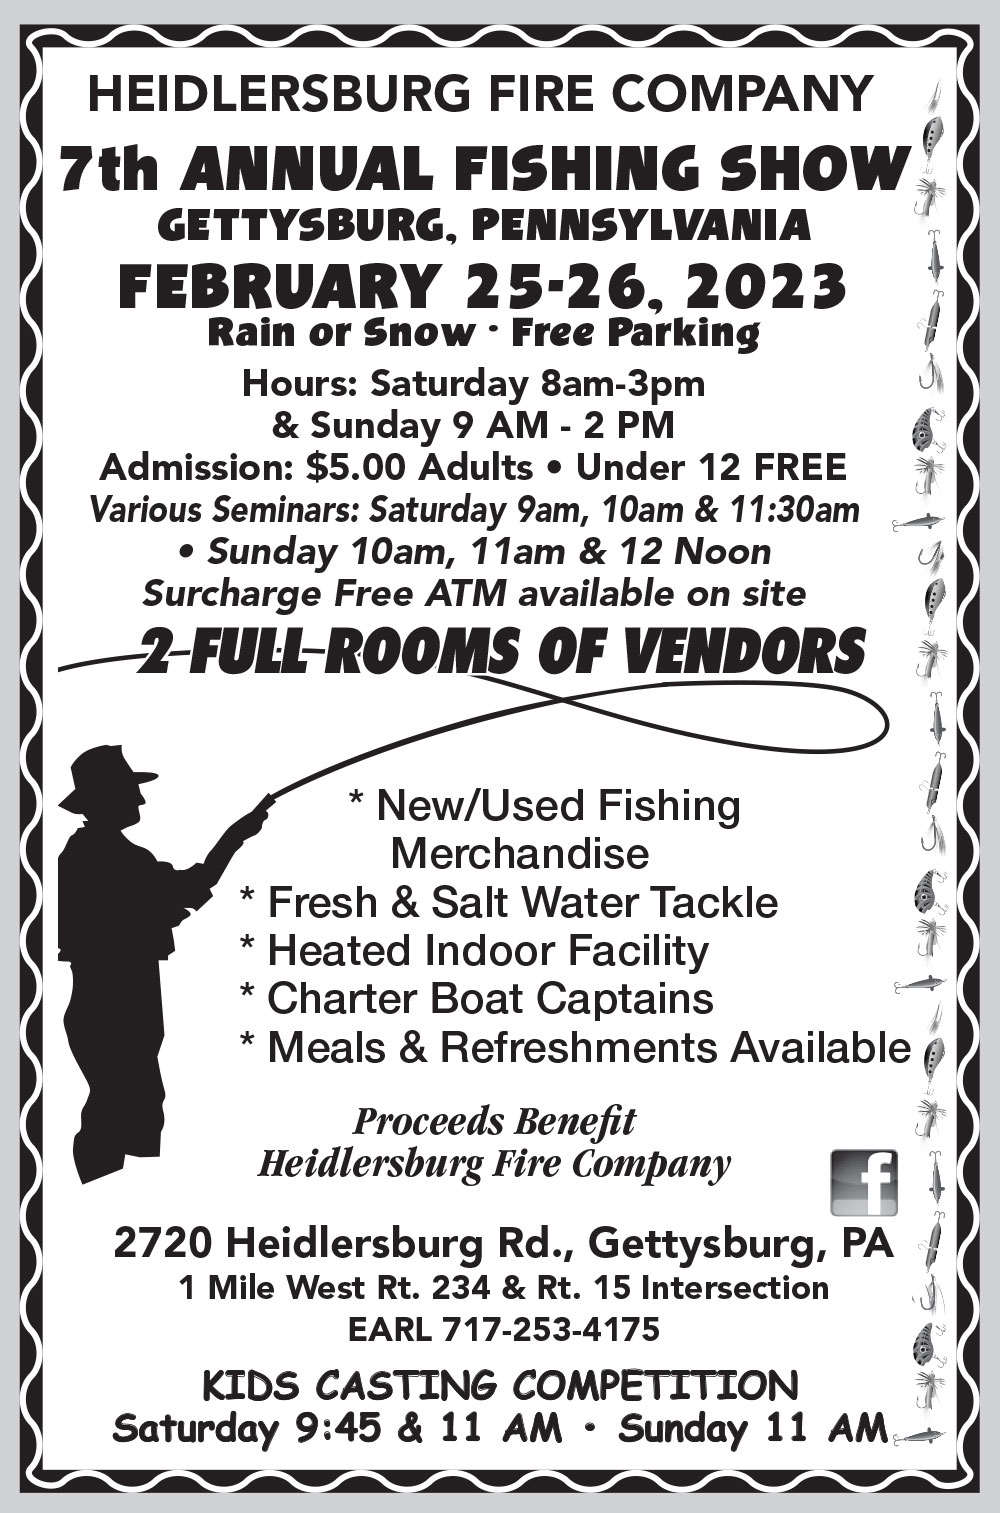 Heidlersburg Fire Company 7th Annual Fishing Show - The Franklin Shopper